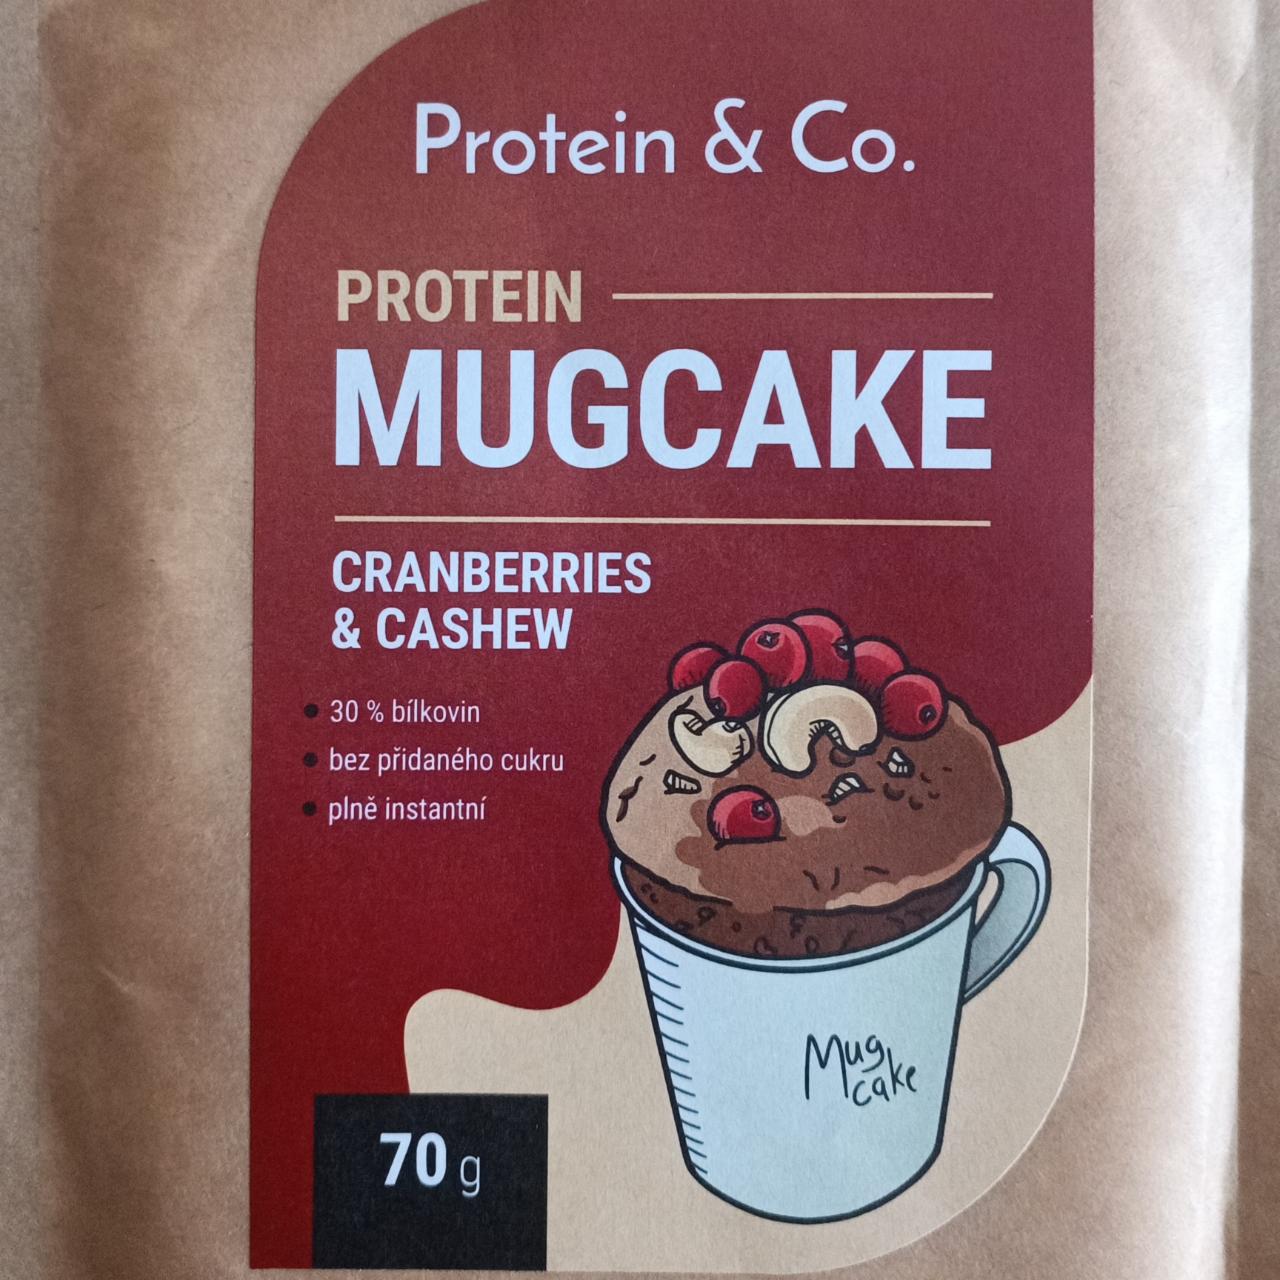 Fotografie - Protein Mugcake Cranberries & Cashew Protein & Co.